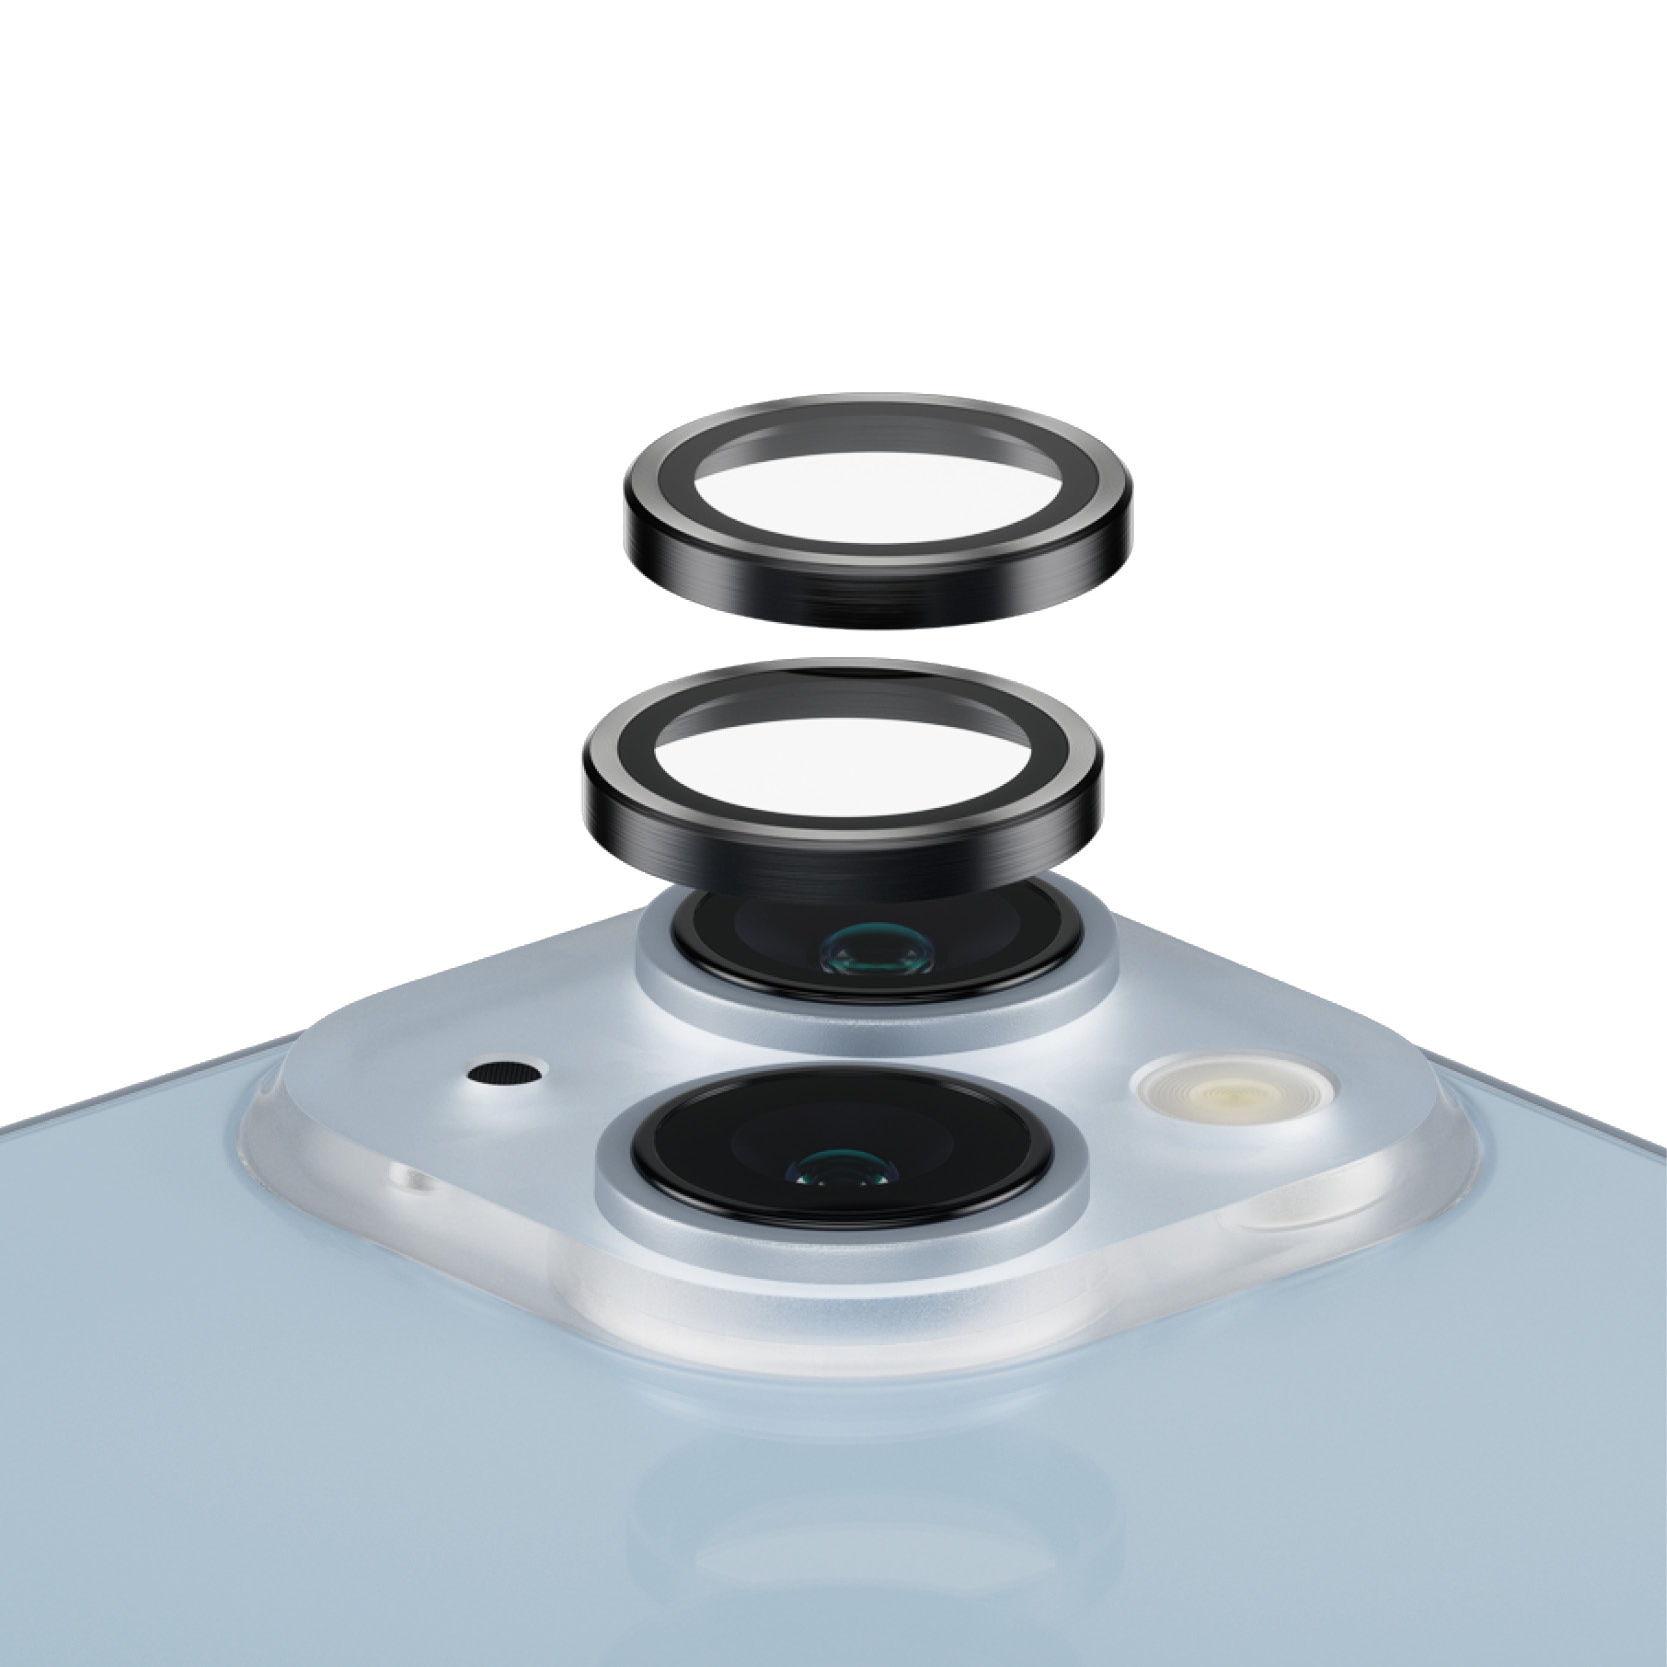 iPhone 14 Plus Hoops Camera Lens Protector, Black